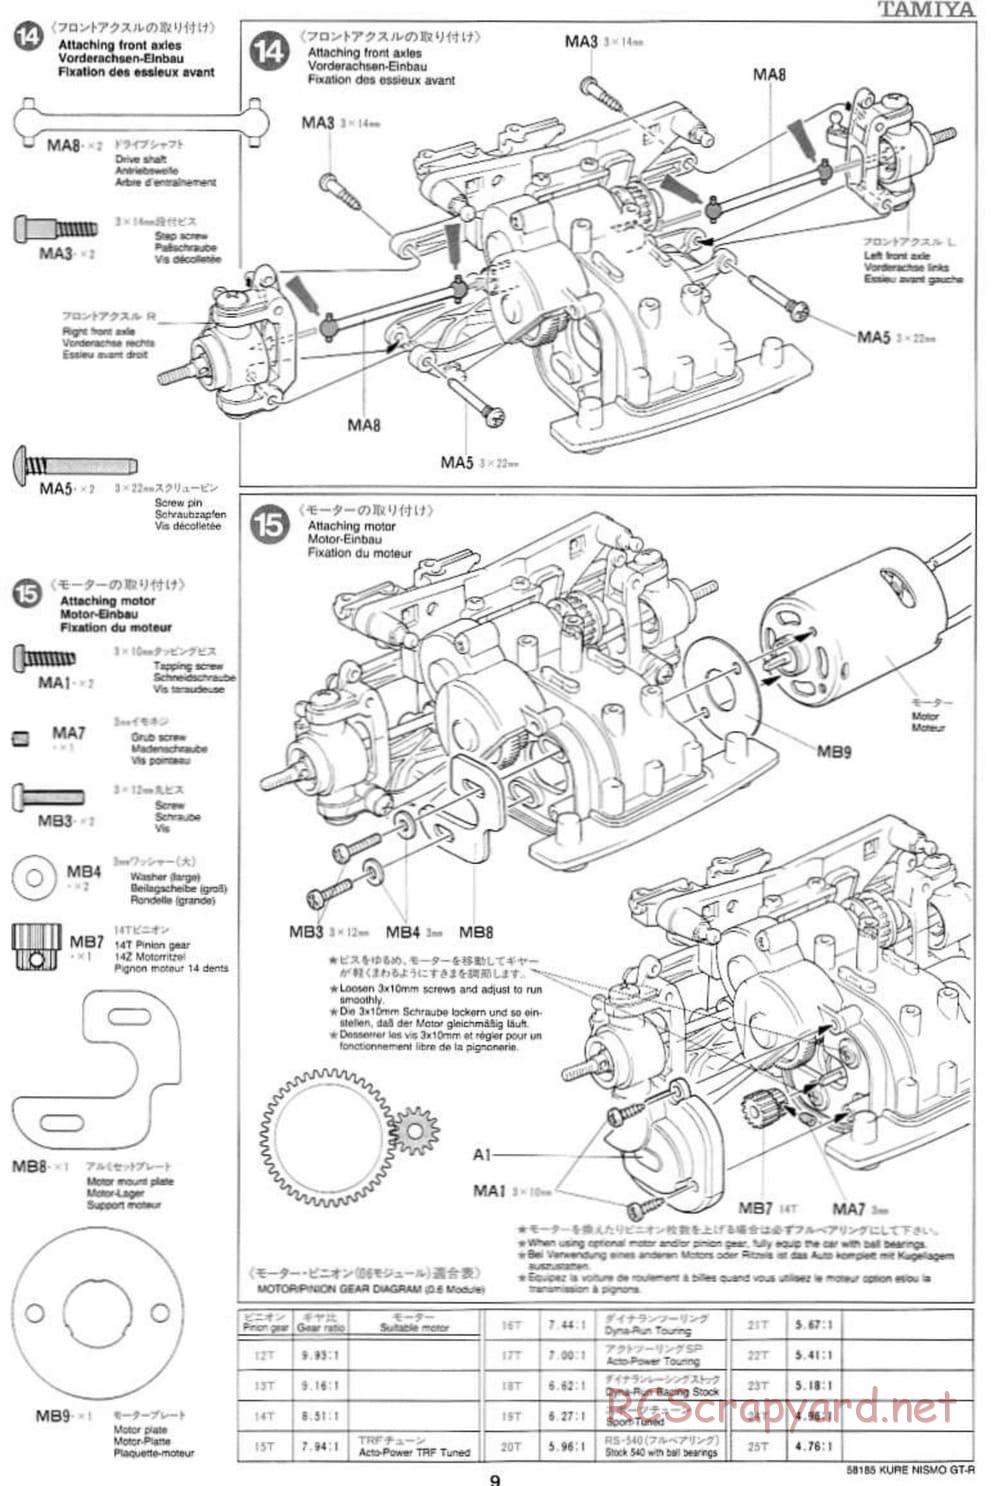 Tamiya - Kure Nismo GT-R - TA-03F Chassis - Manual - Page 9